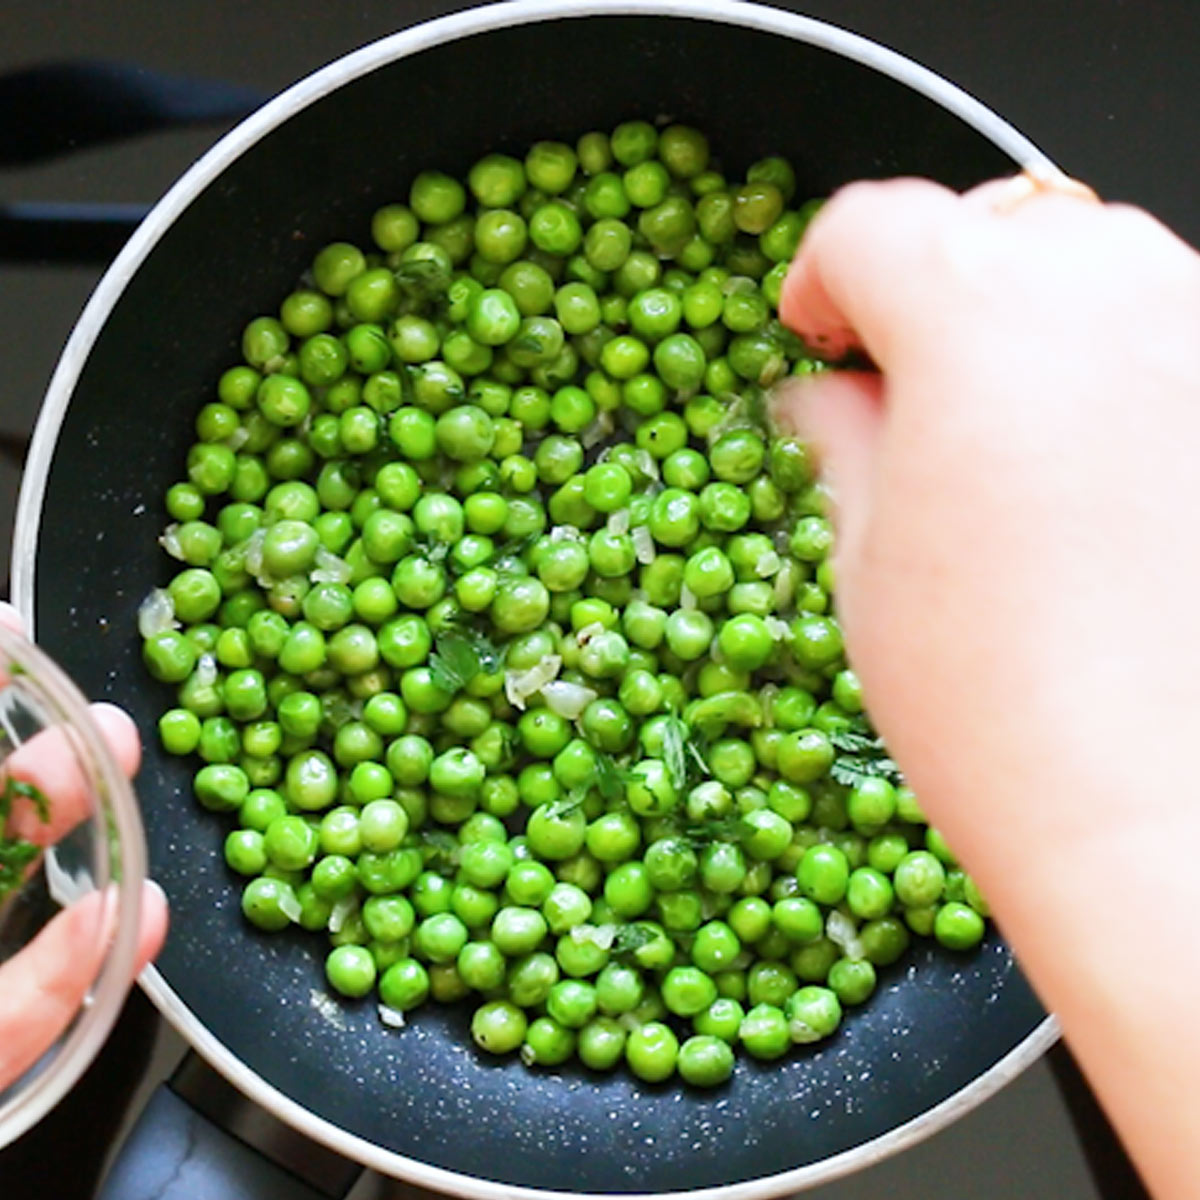 garnish green peas with parsley